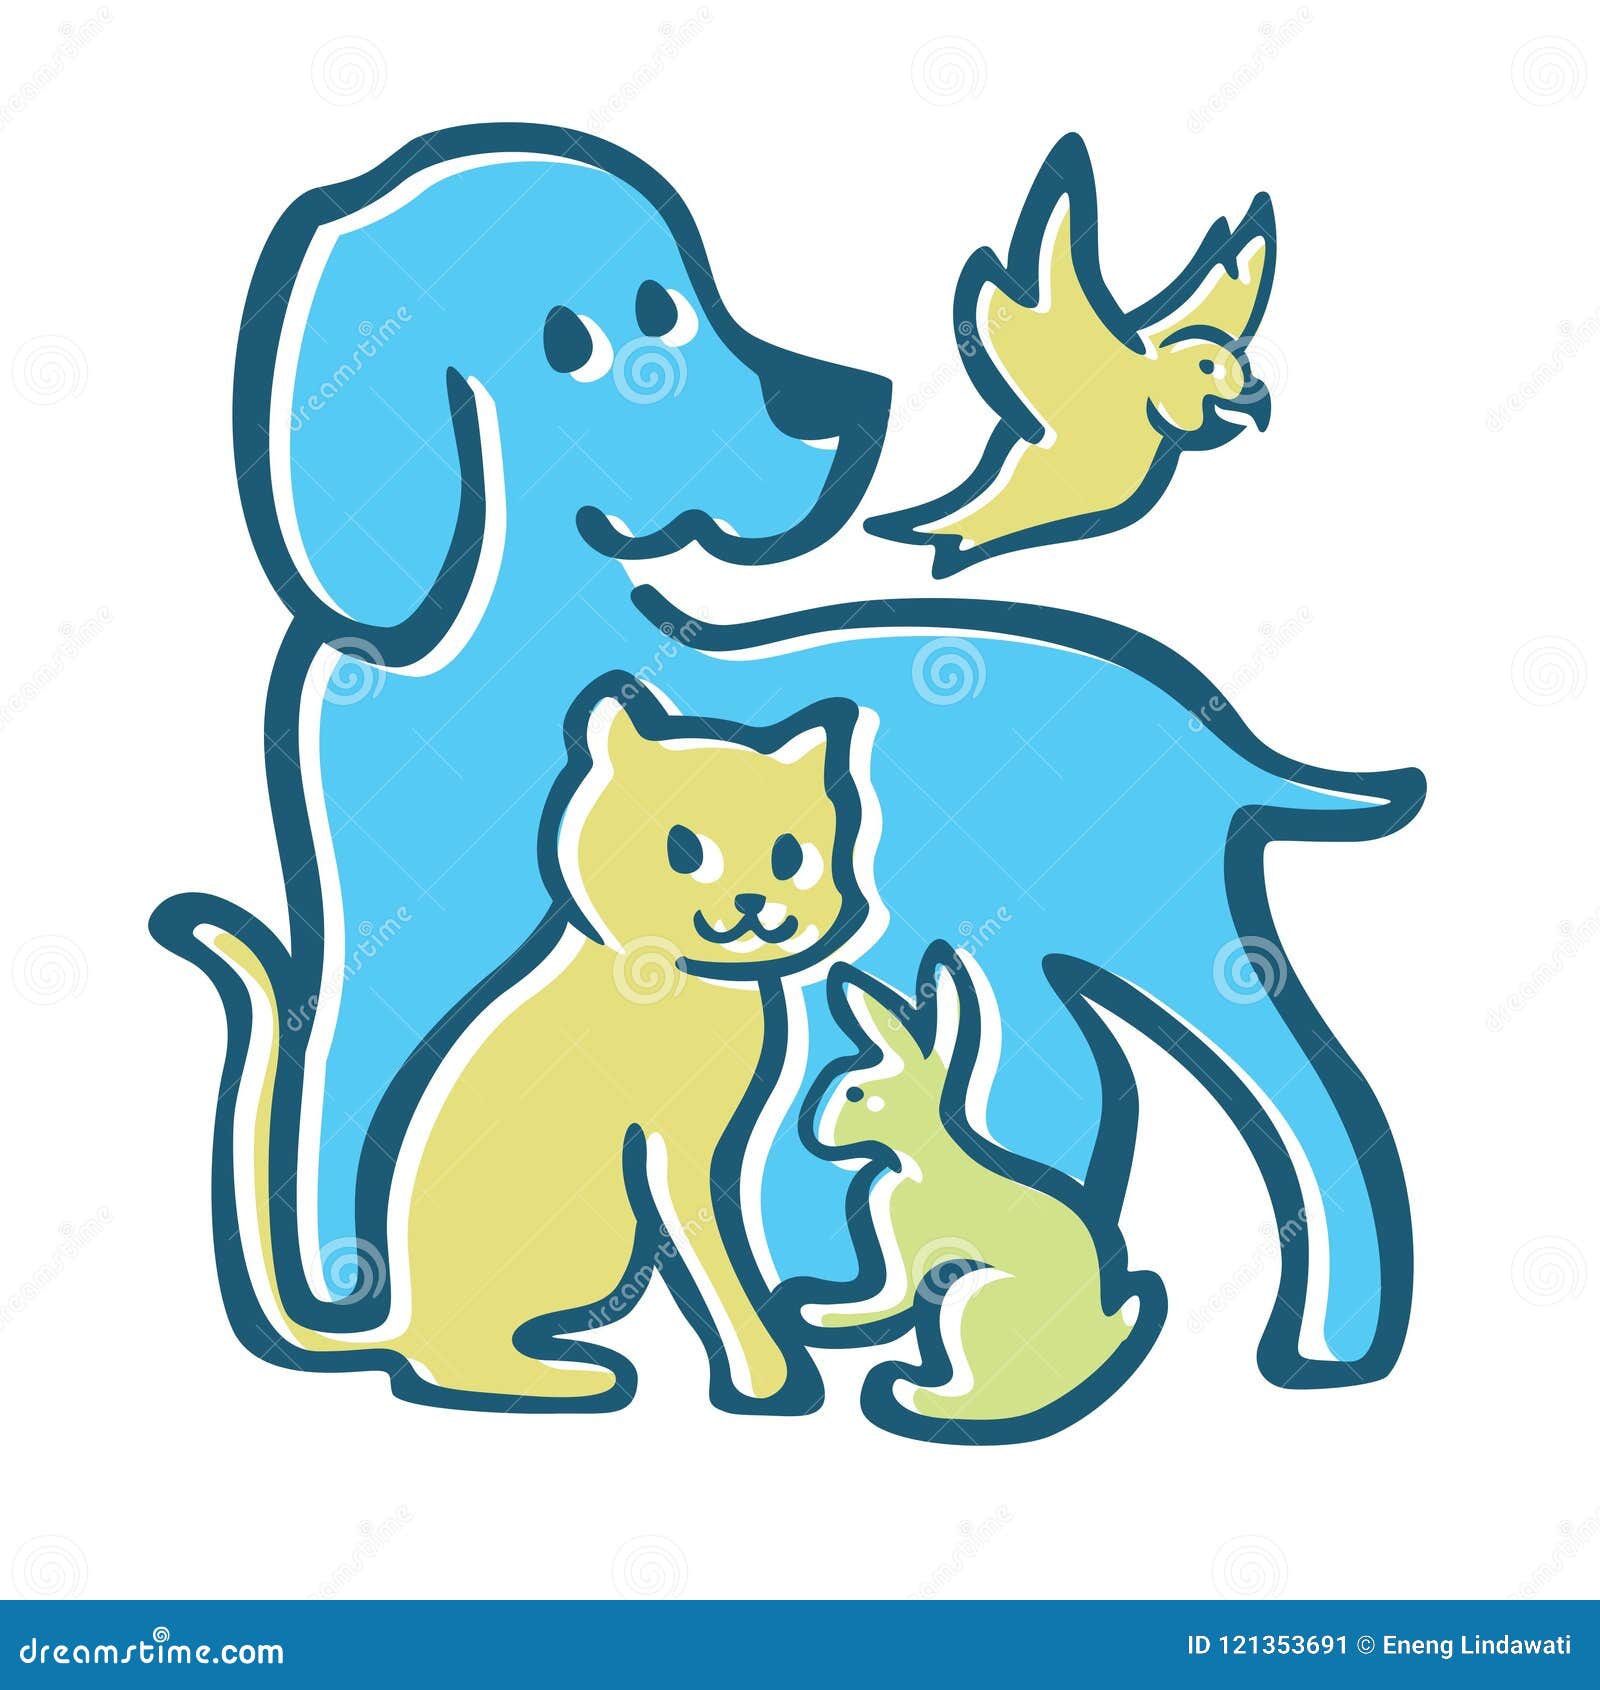 The Family pet cool design stock illustration. Illustration of shop -  121353691